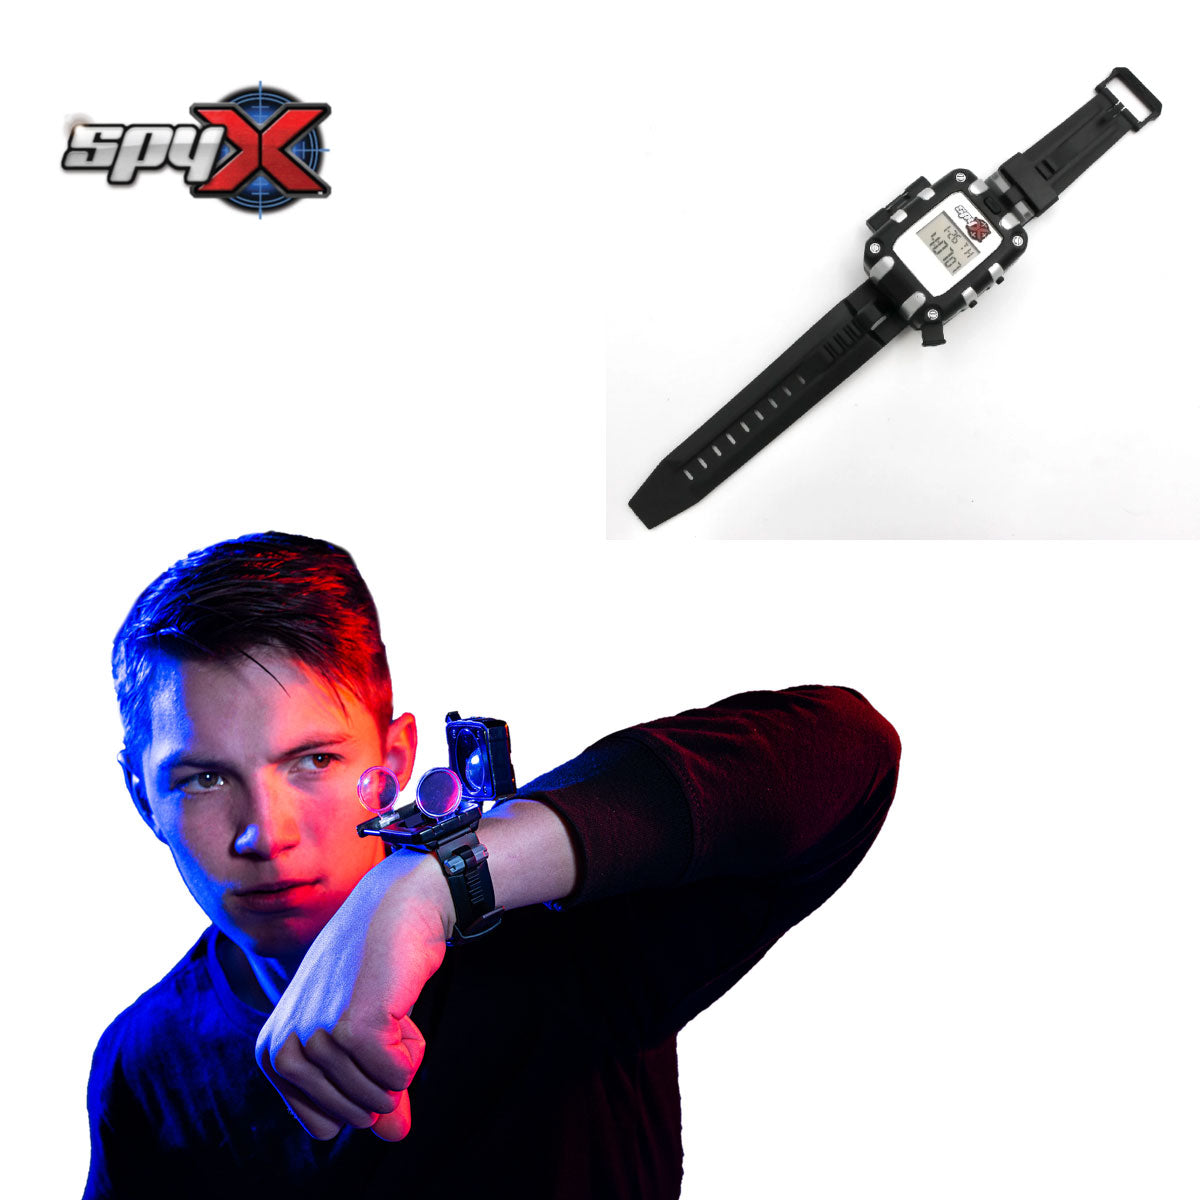 SpyX 6-in-1 Watch